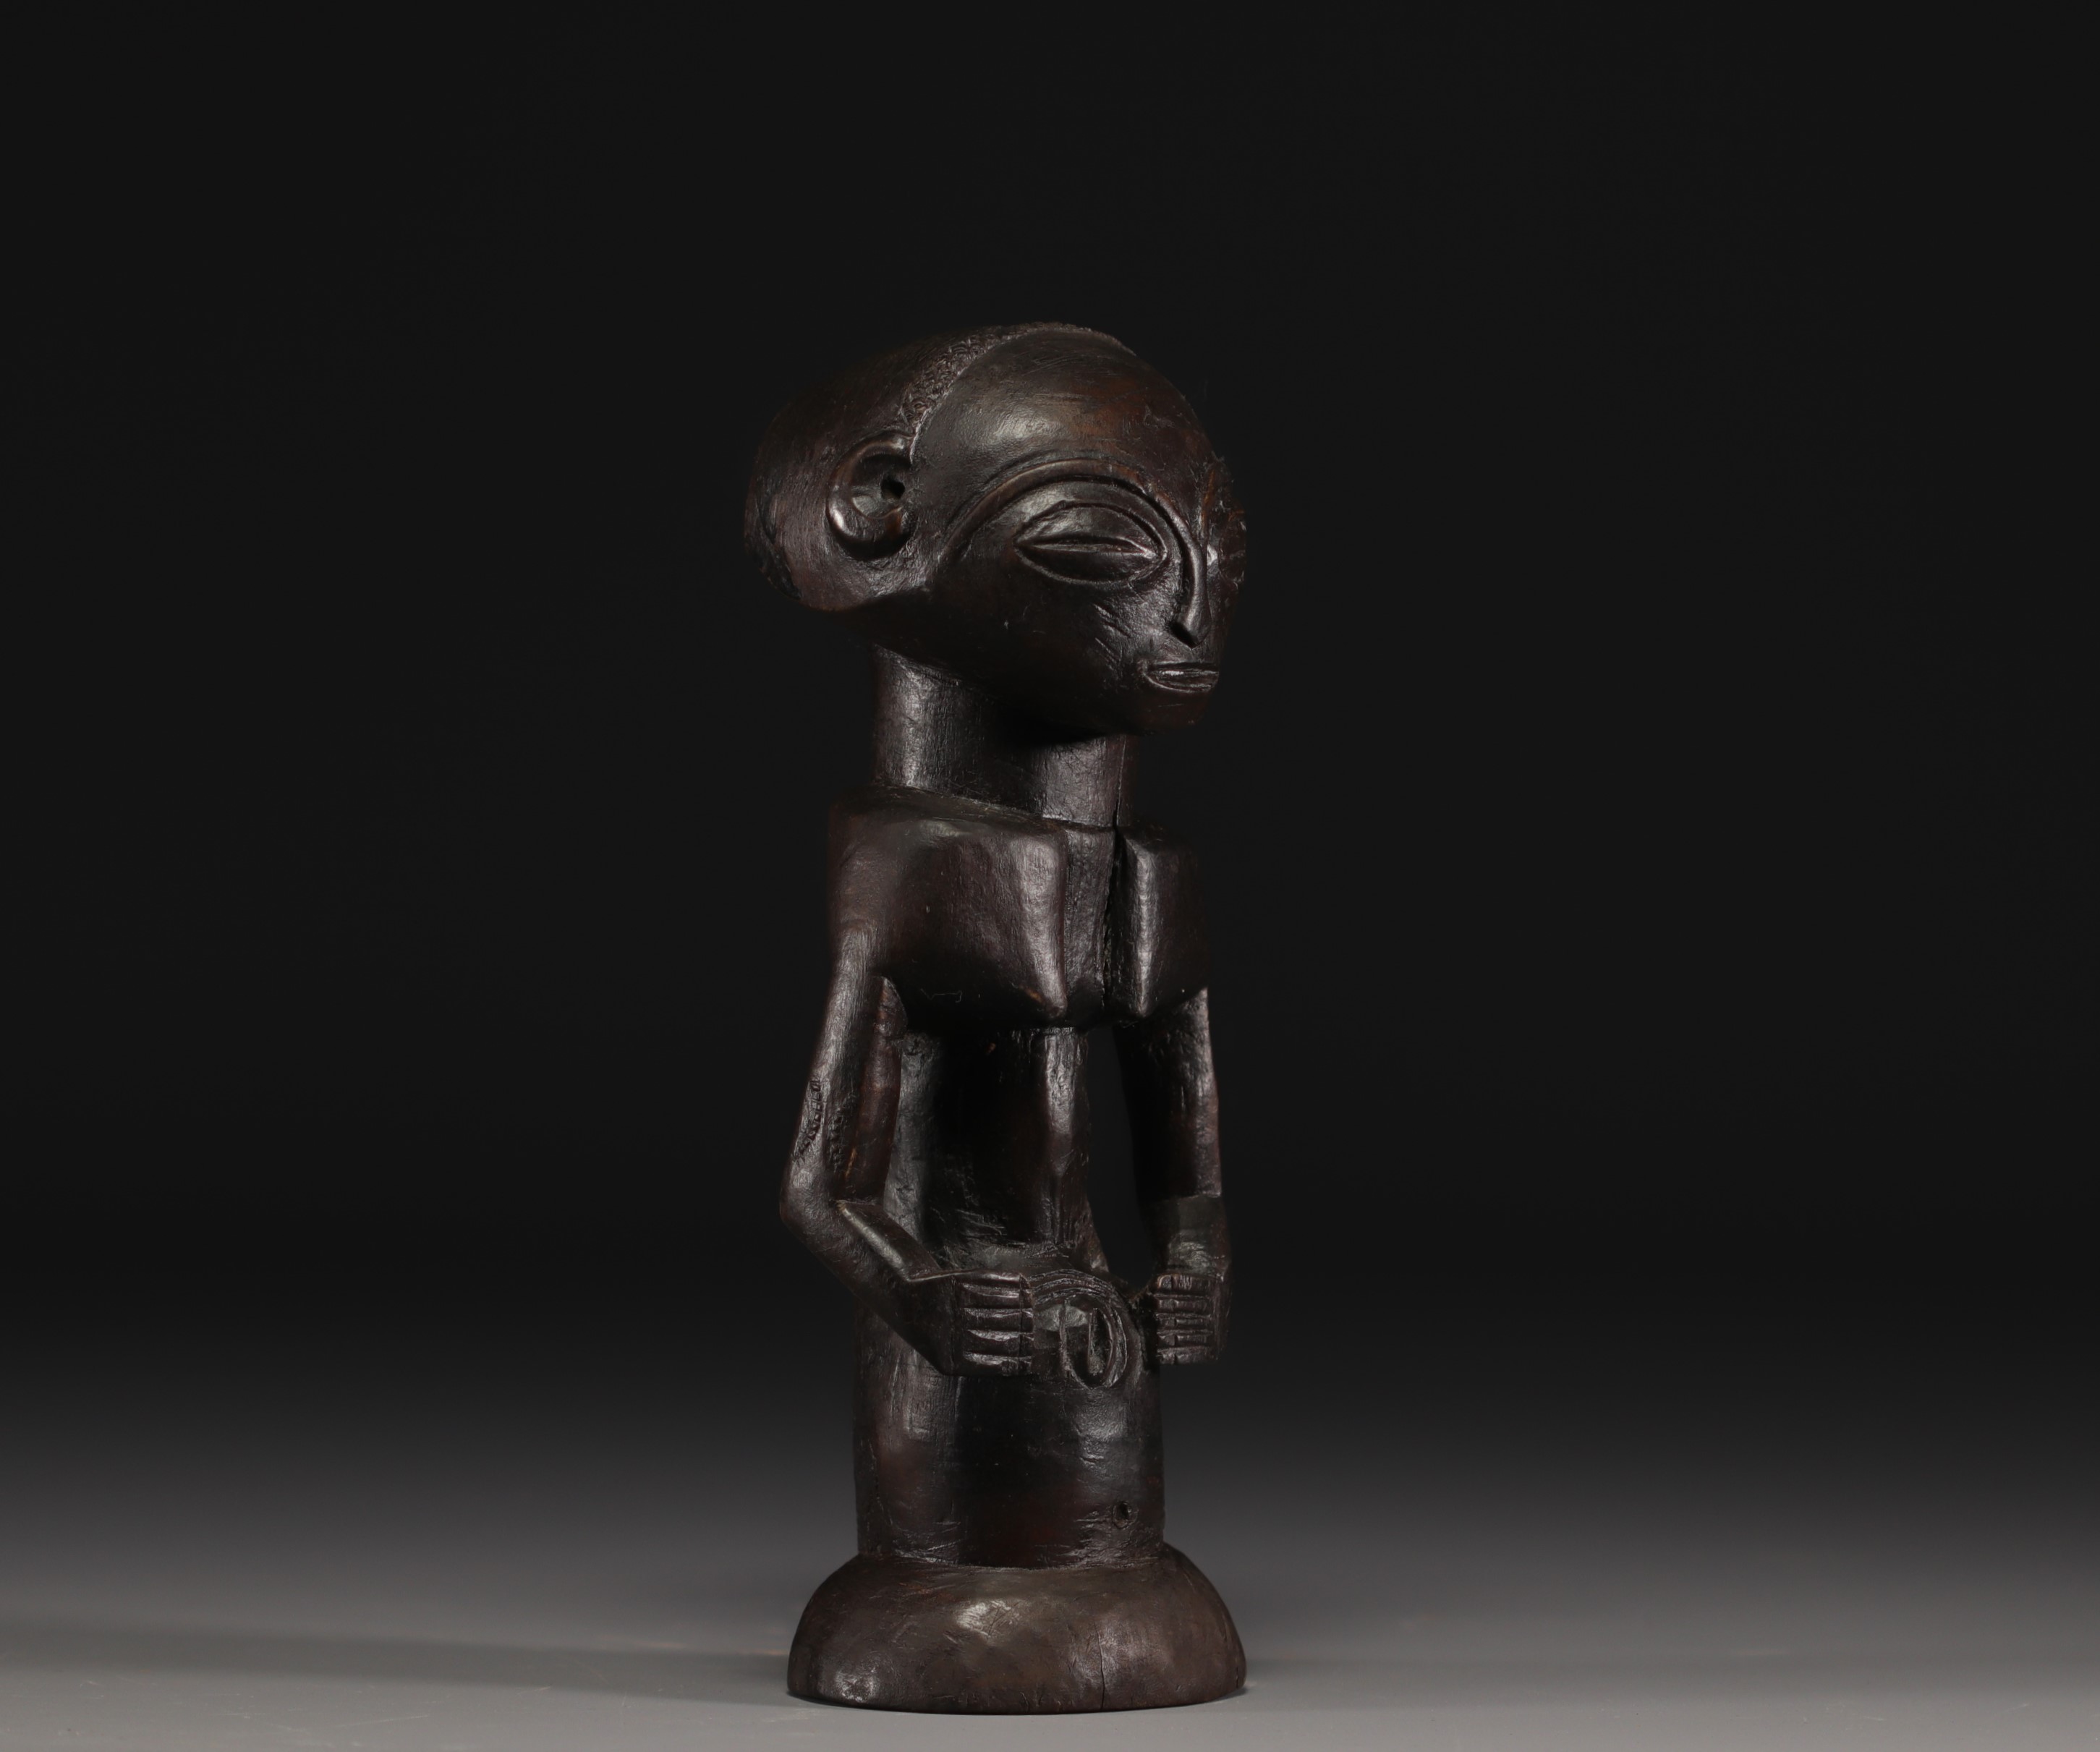 Unusual Luba figure with deep black patina-  bust - Dem.Rep. Congo